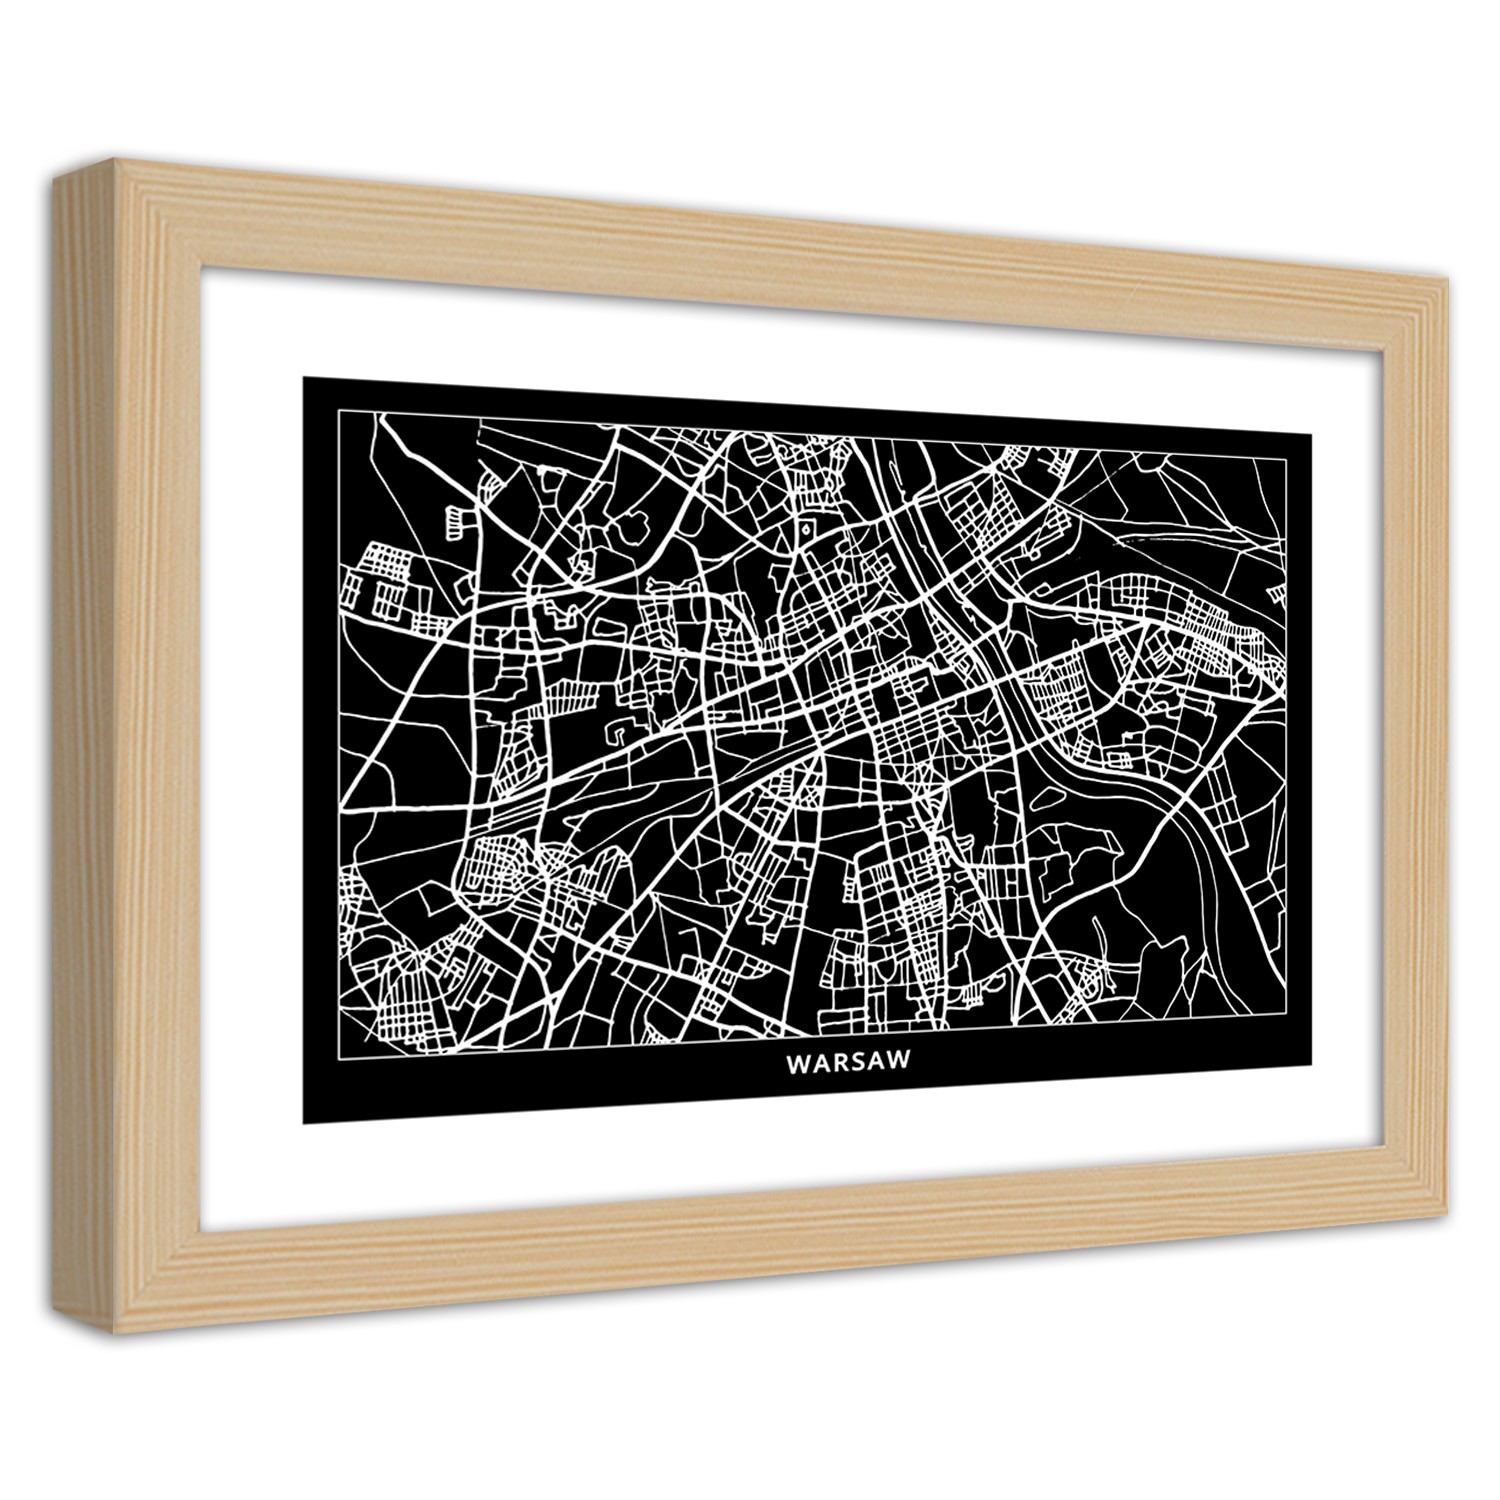 Caro Picture in natural frame, City plan warsaw